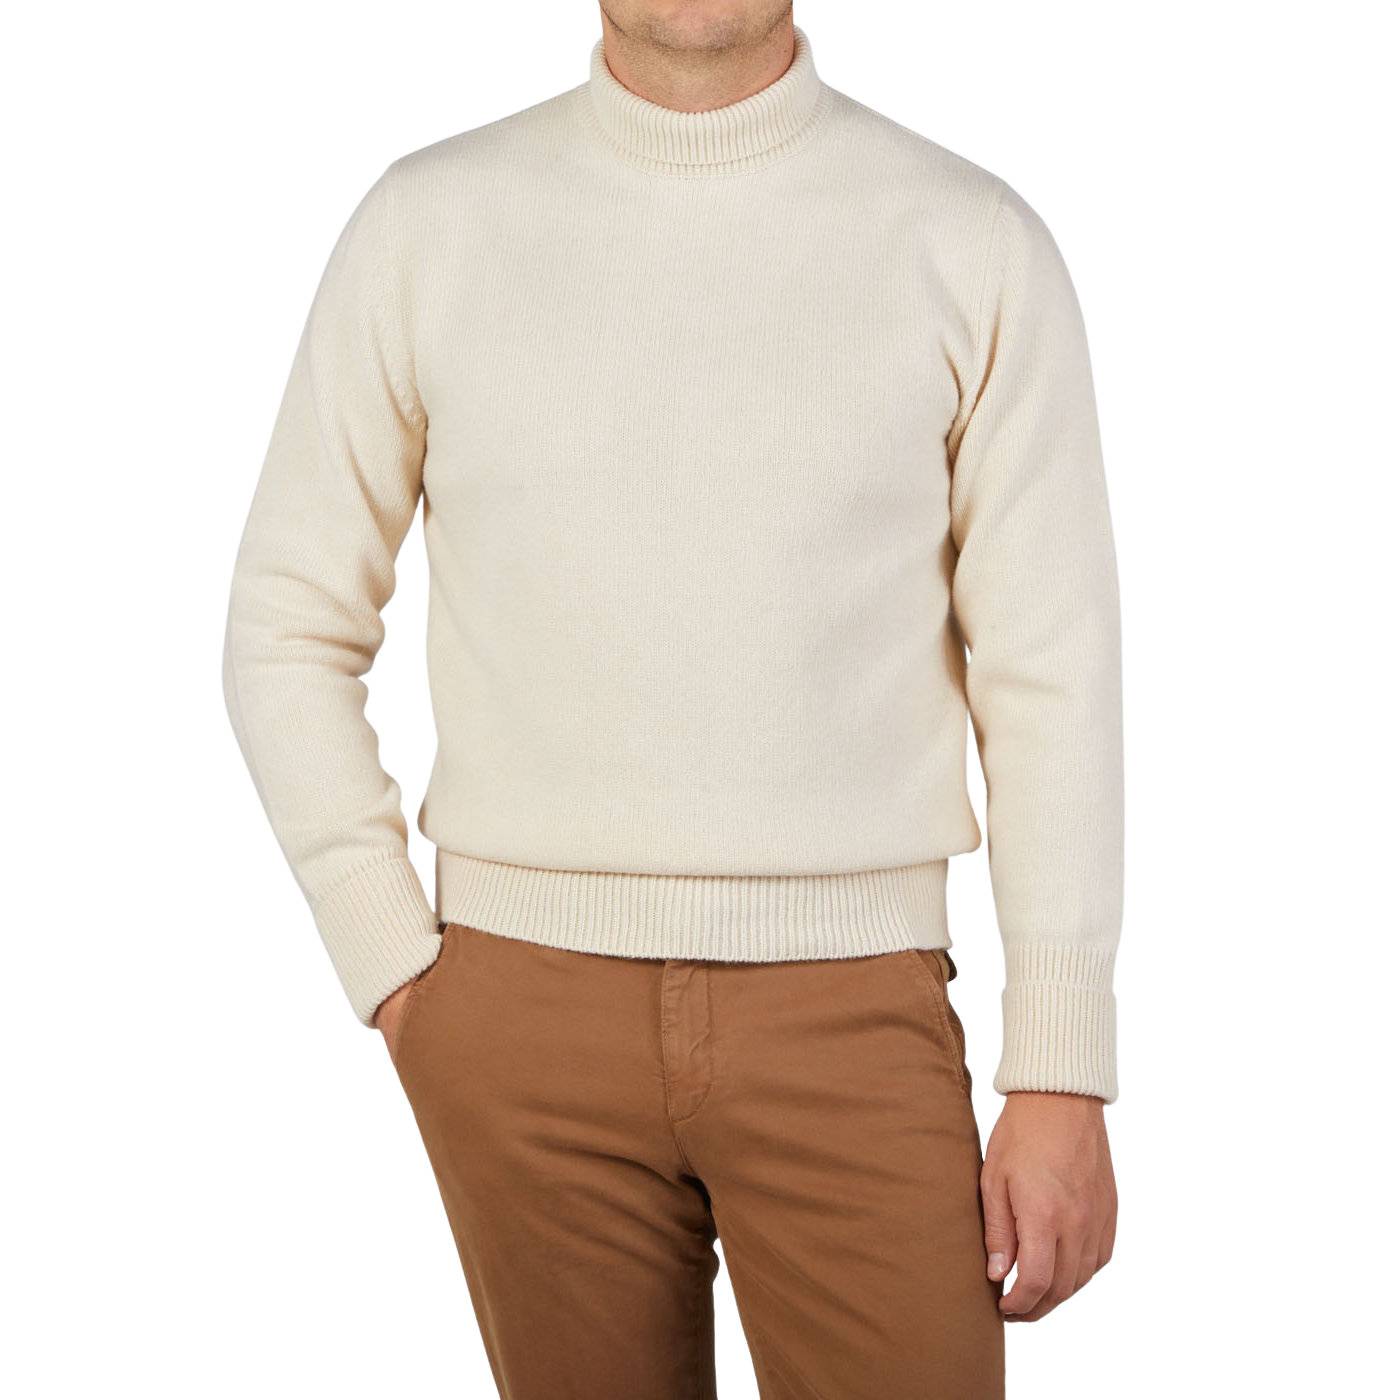 G.R.P Ecru Wool Cashmere Mock Neck Sweater Front